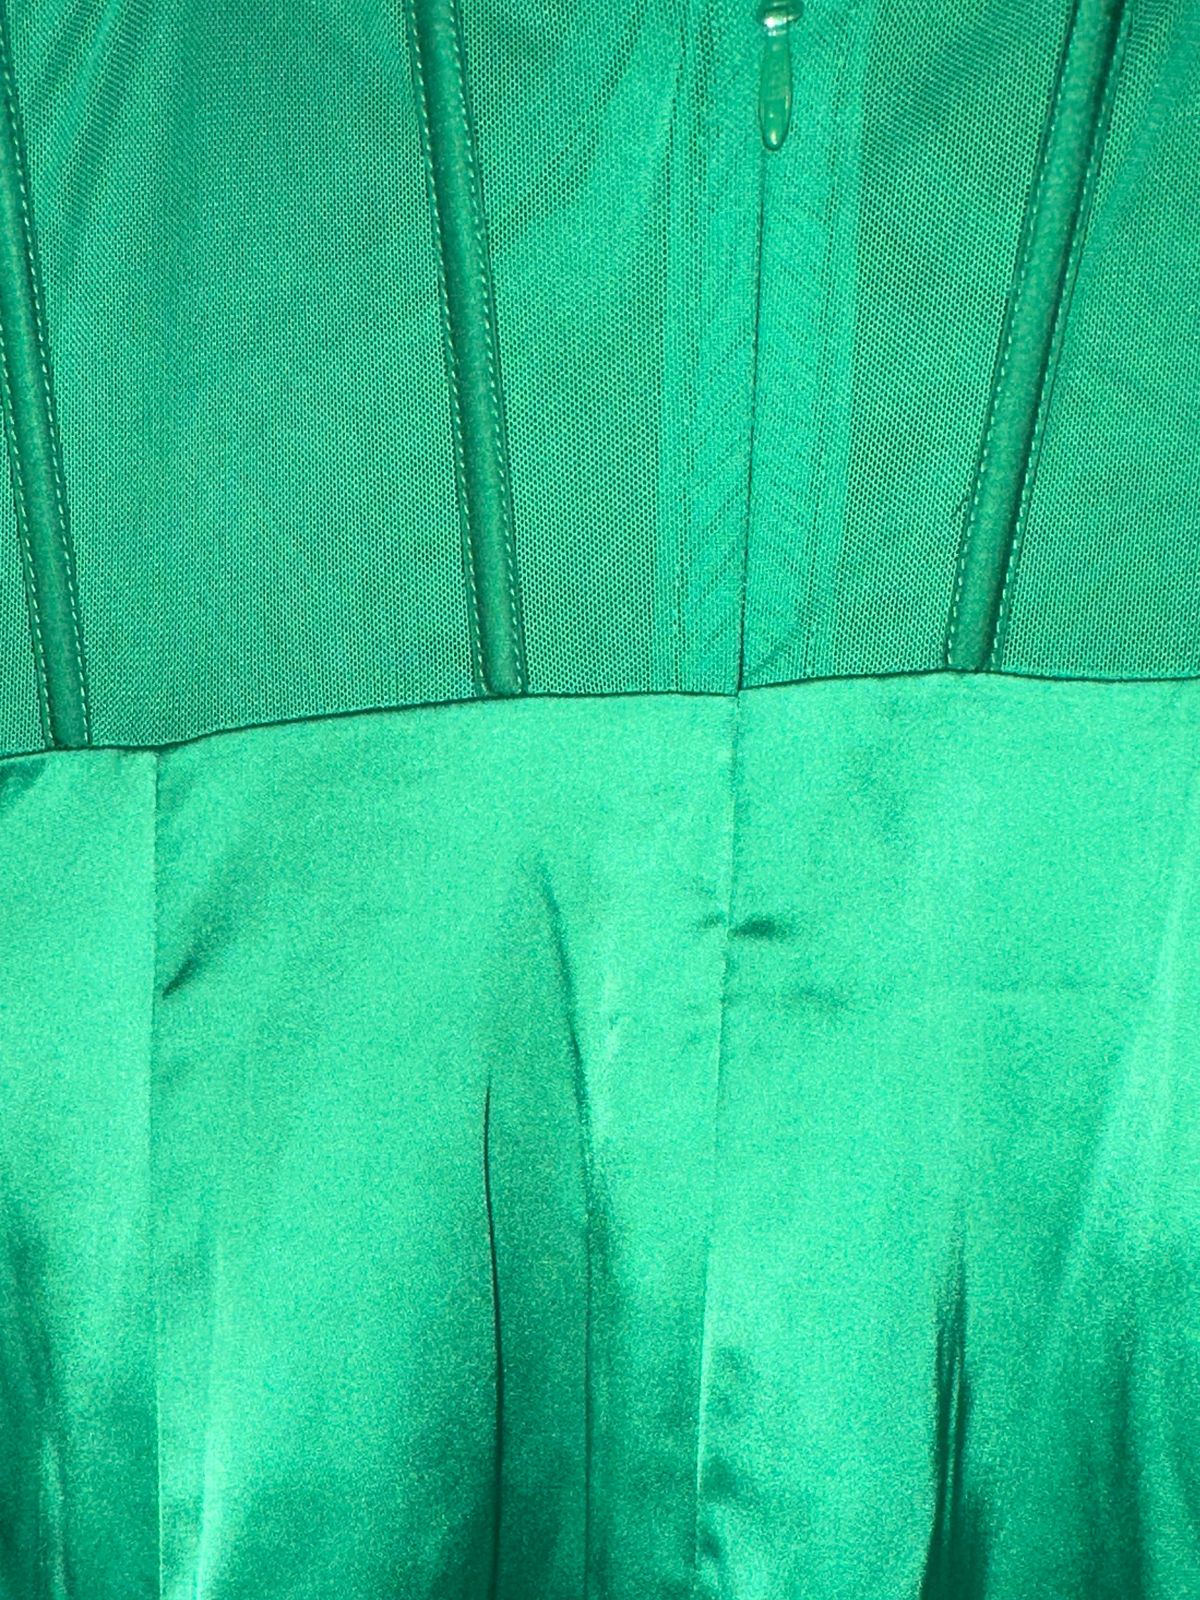 Meshki Size 10 Prom Strapless Sheer Green Side Slit Dress on Queenly